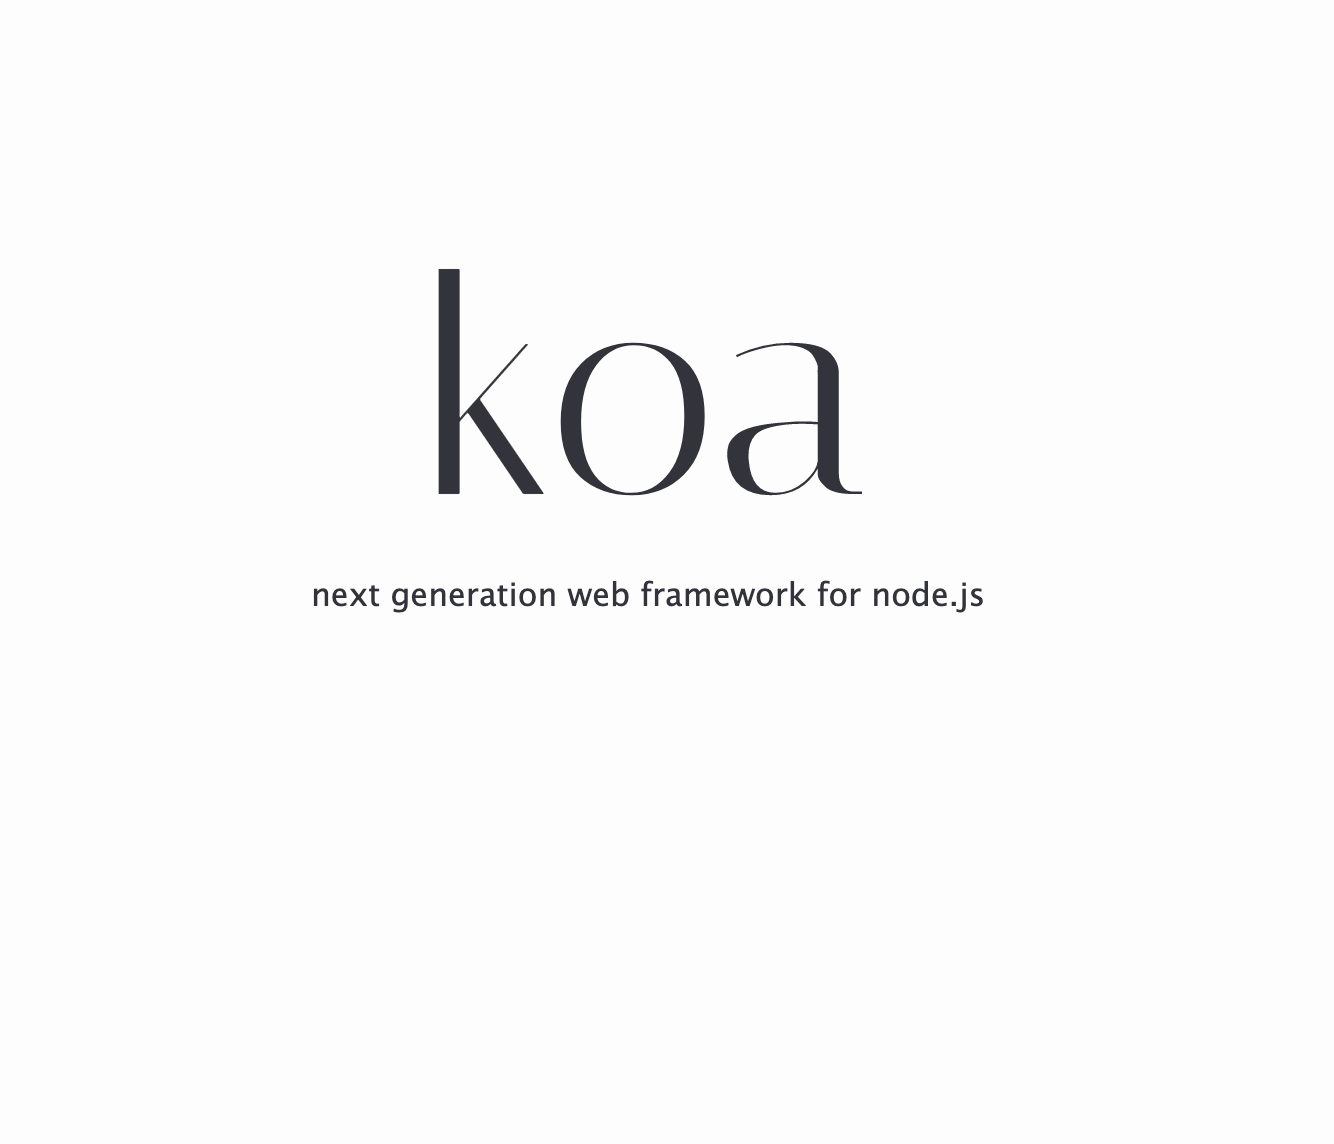 application server using koa